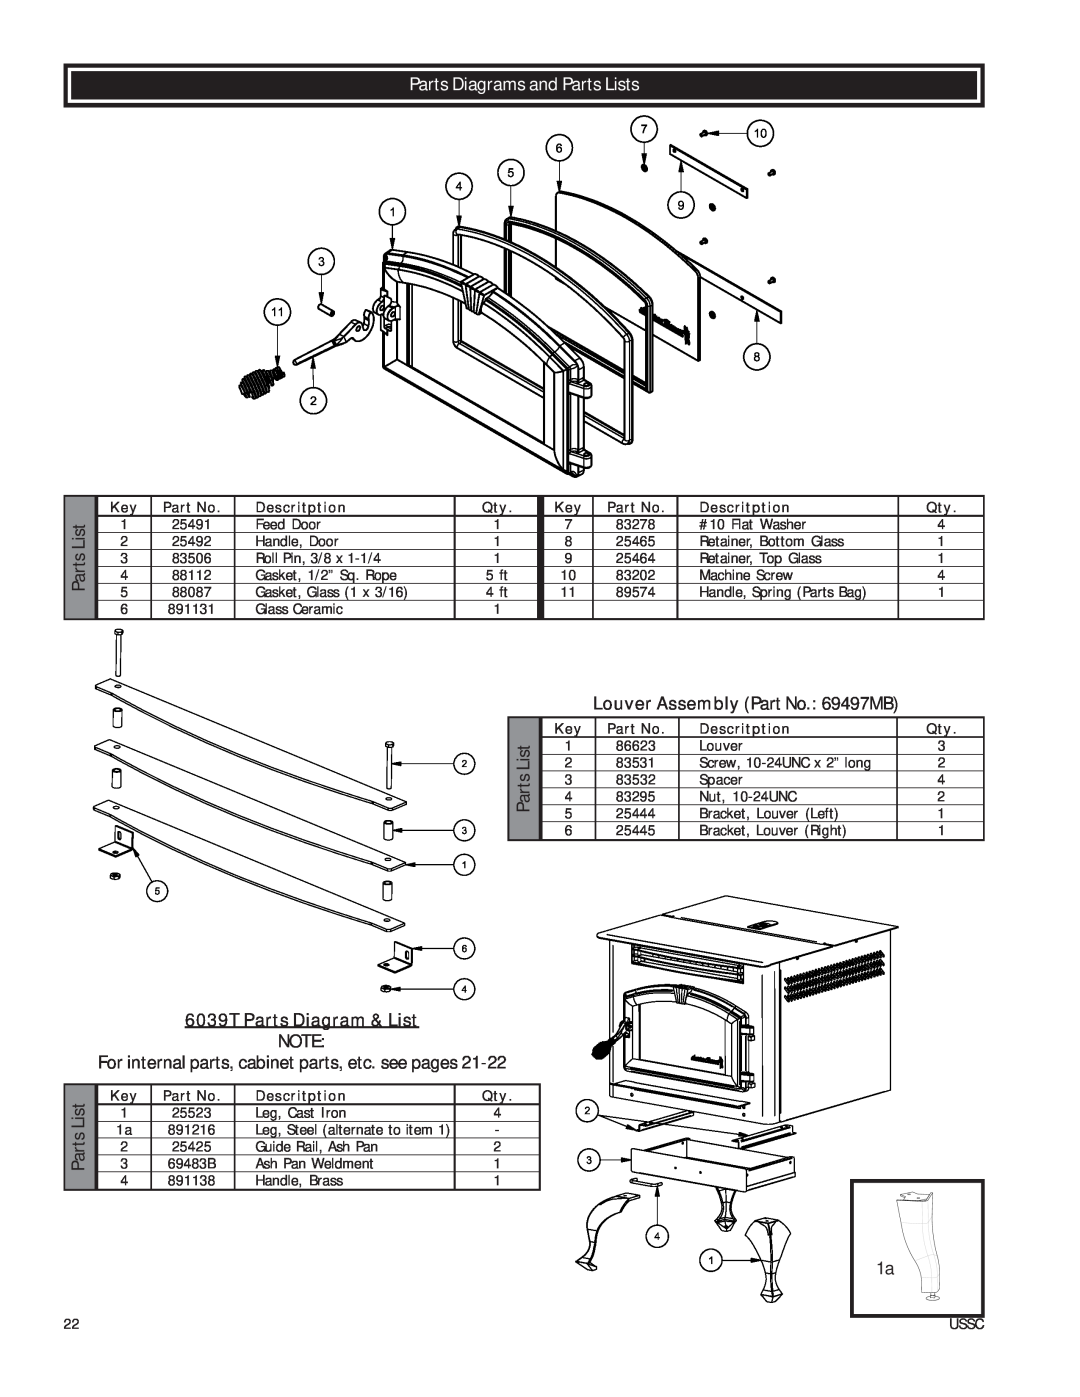 United States Stove owner manual Parts Diagrams and Parts Lists, 6039T Parts Diagram & List, Descritption 